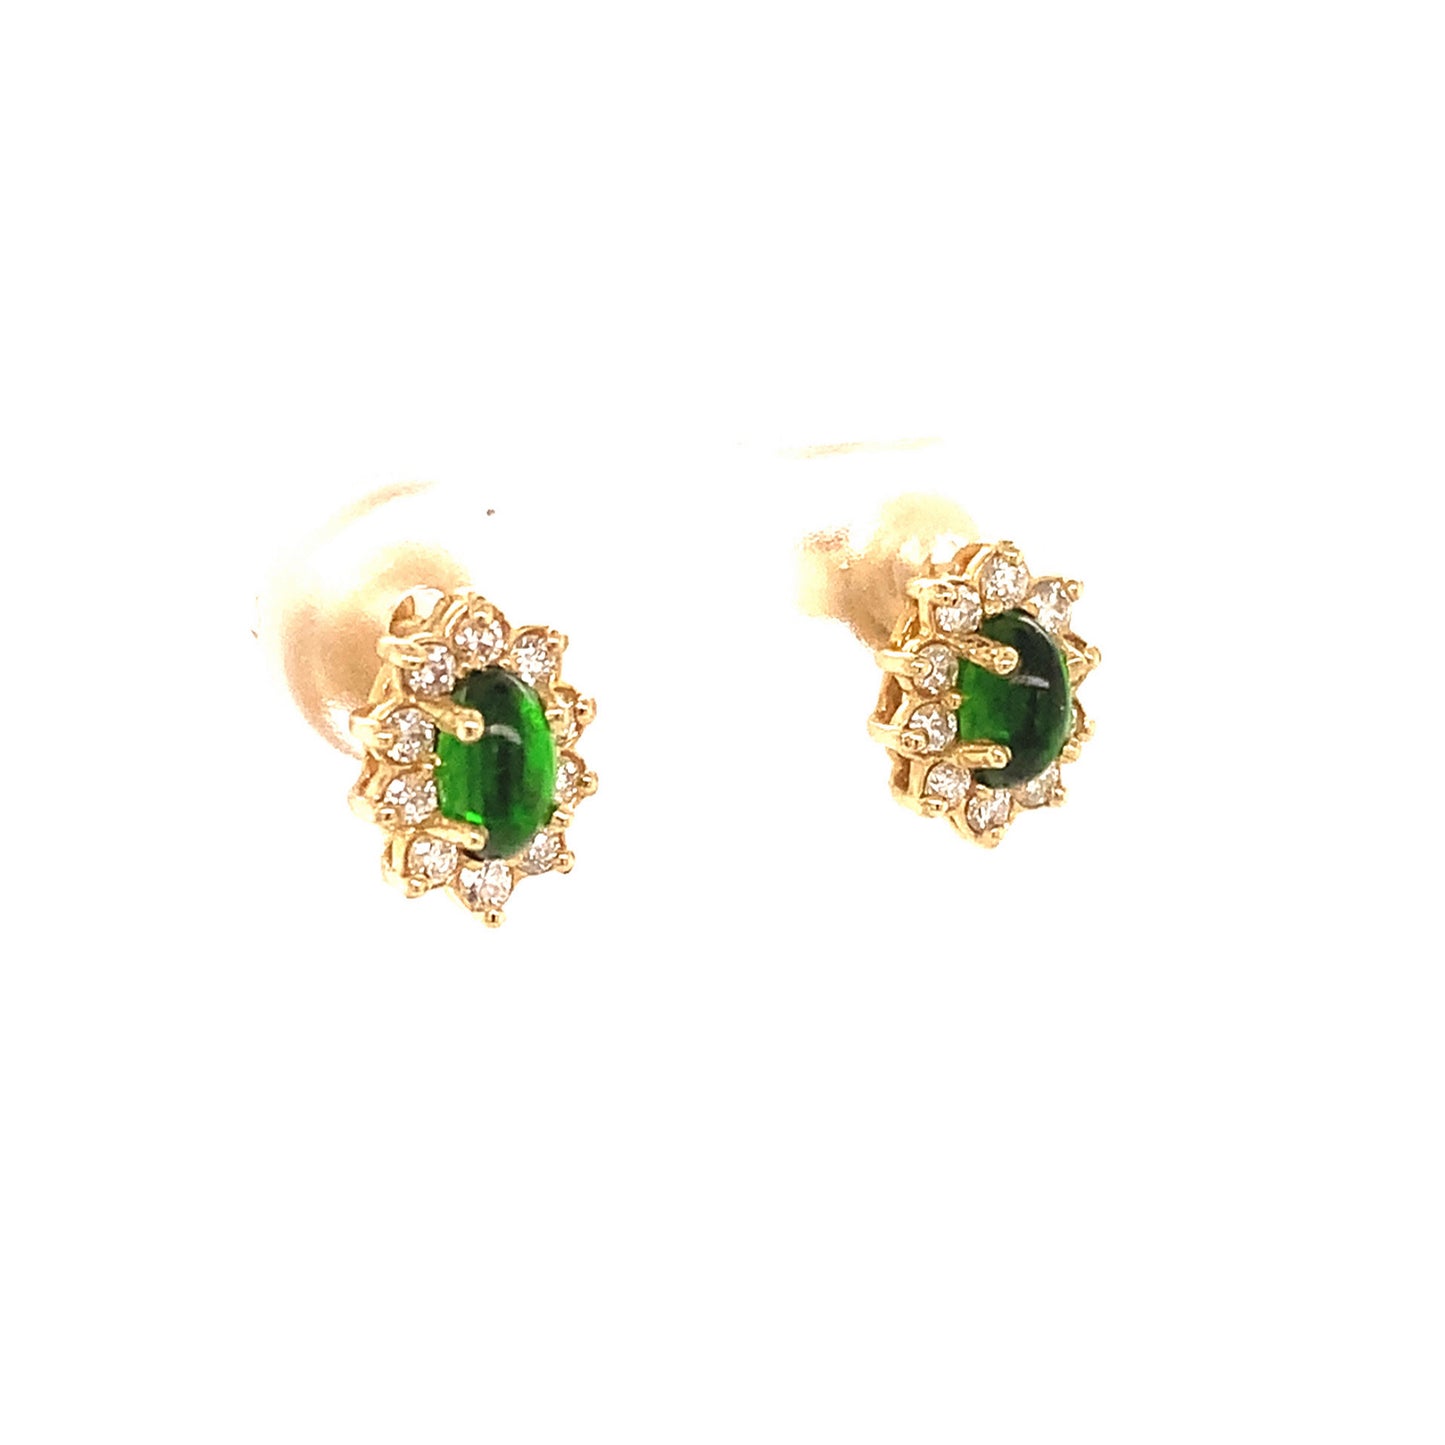 Natural Tourmaline Diamond Earrings 14k Gold 0.85 TCW Certified $1,250 113472 - Certified Estate Jewelry